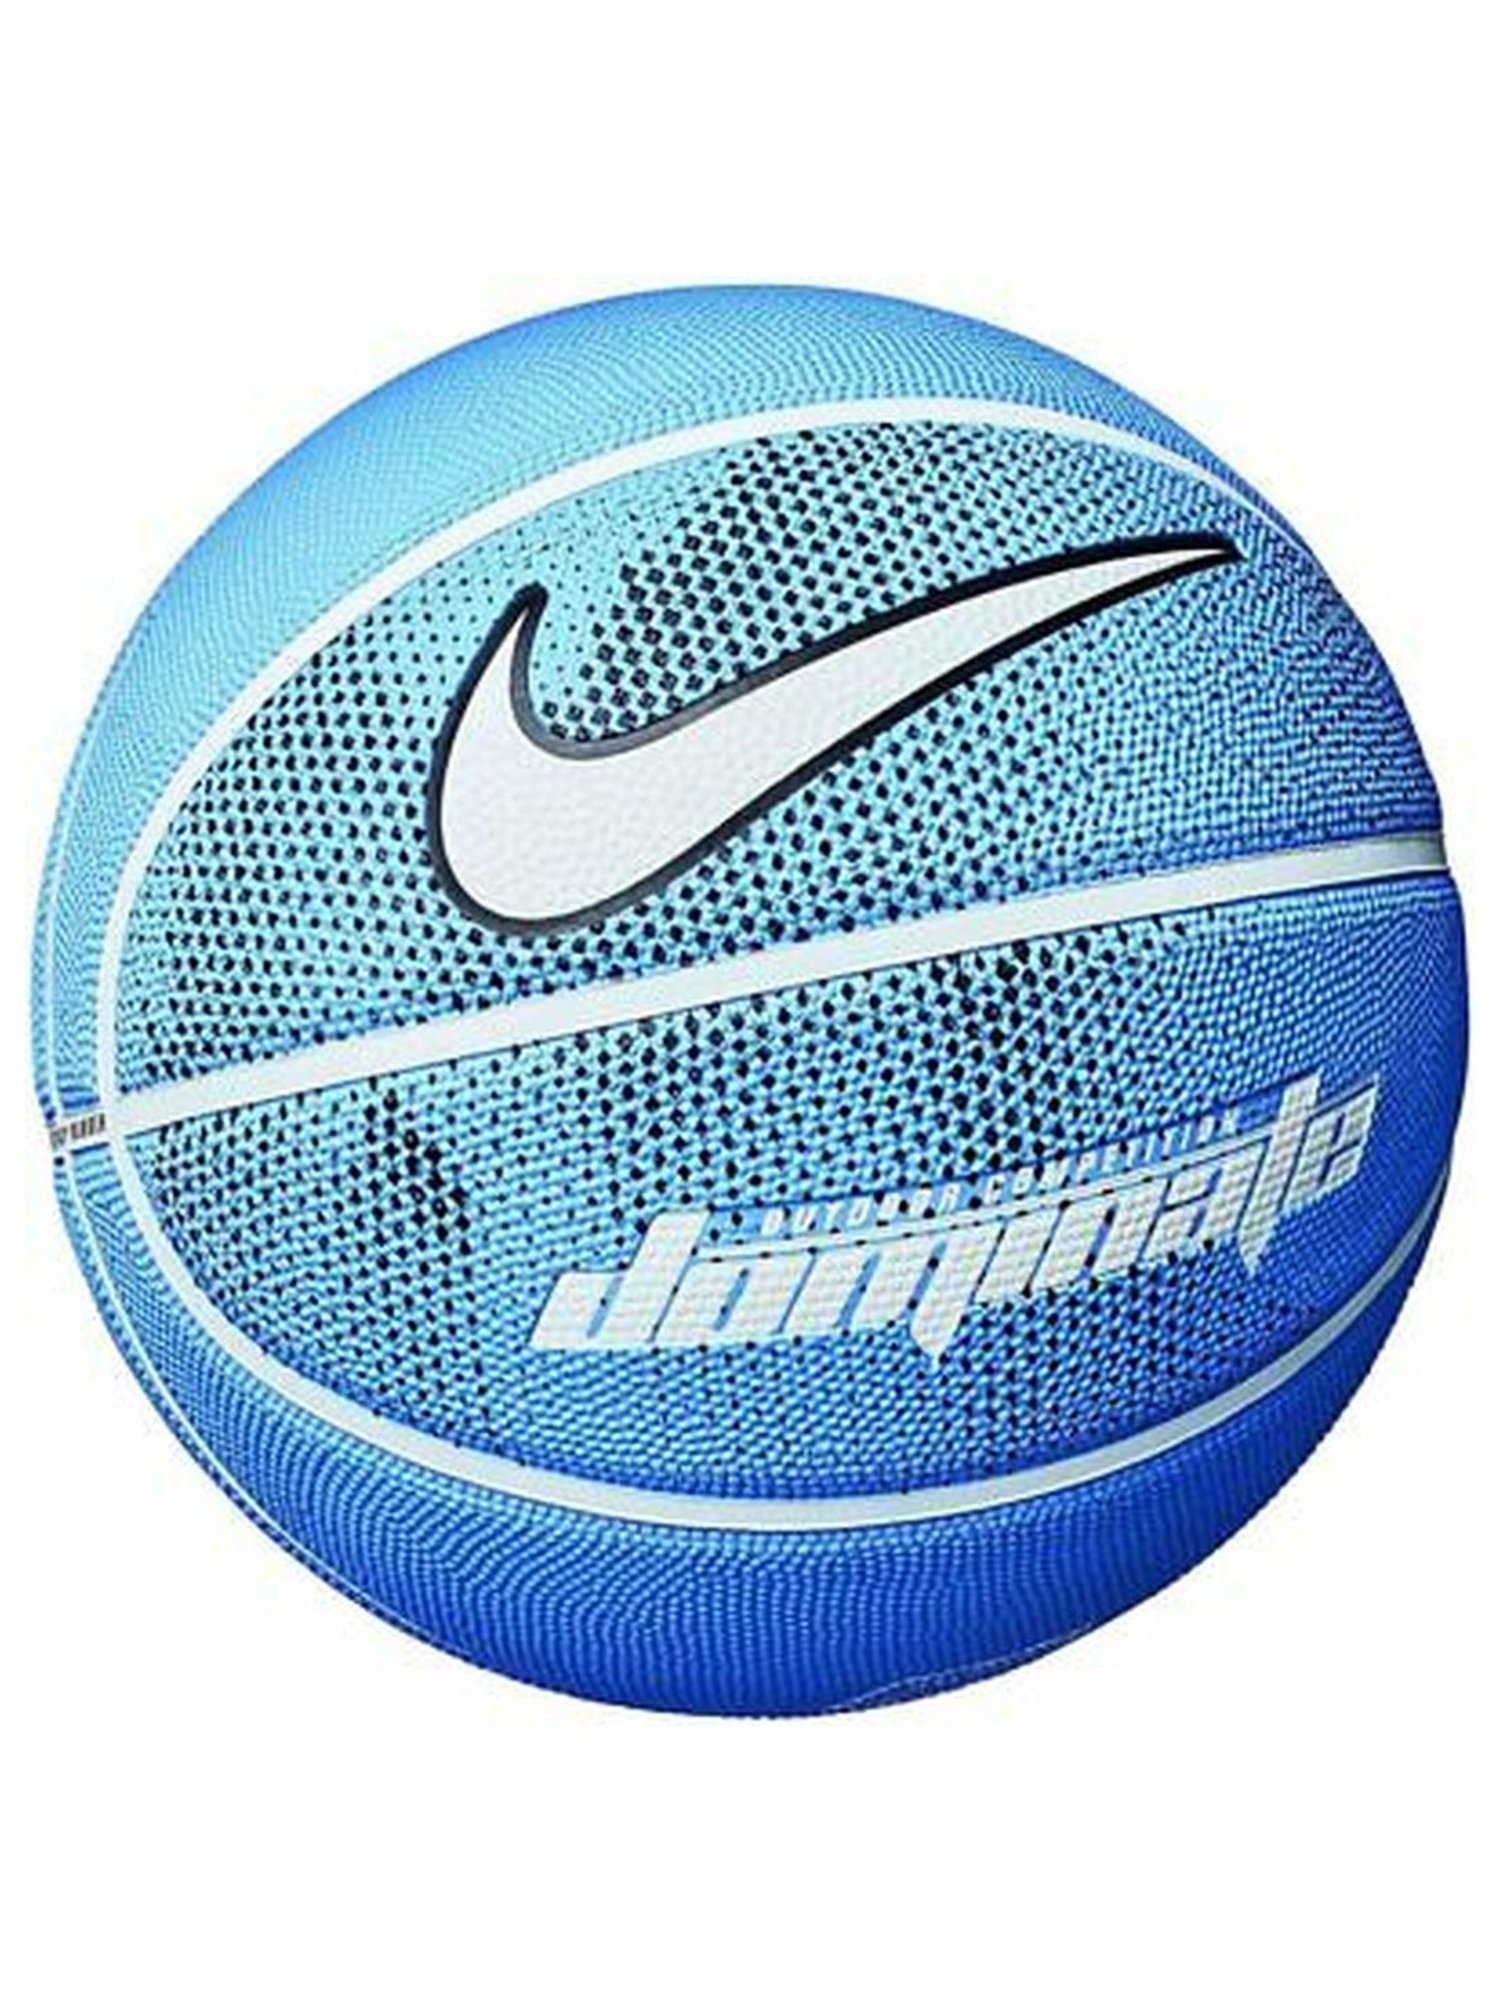 Nike Dominate 8P Basketball